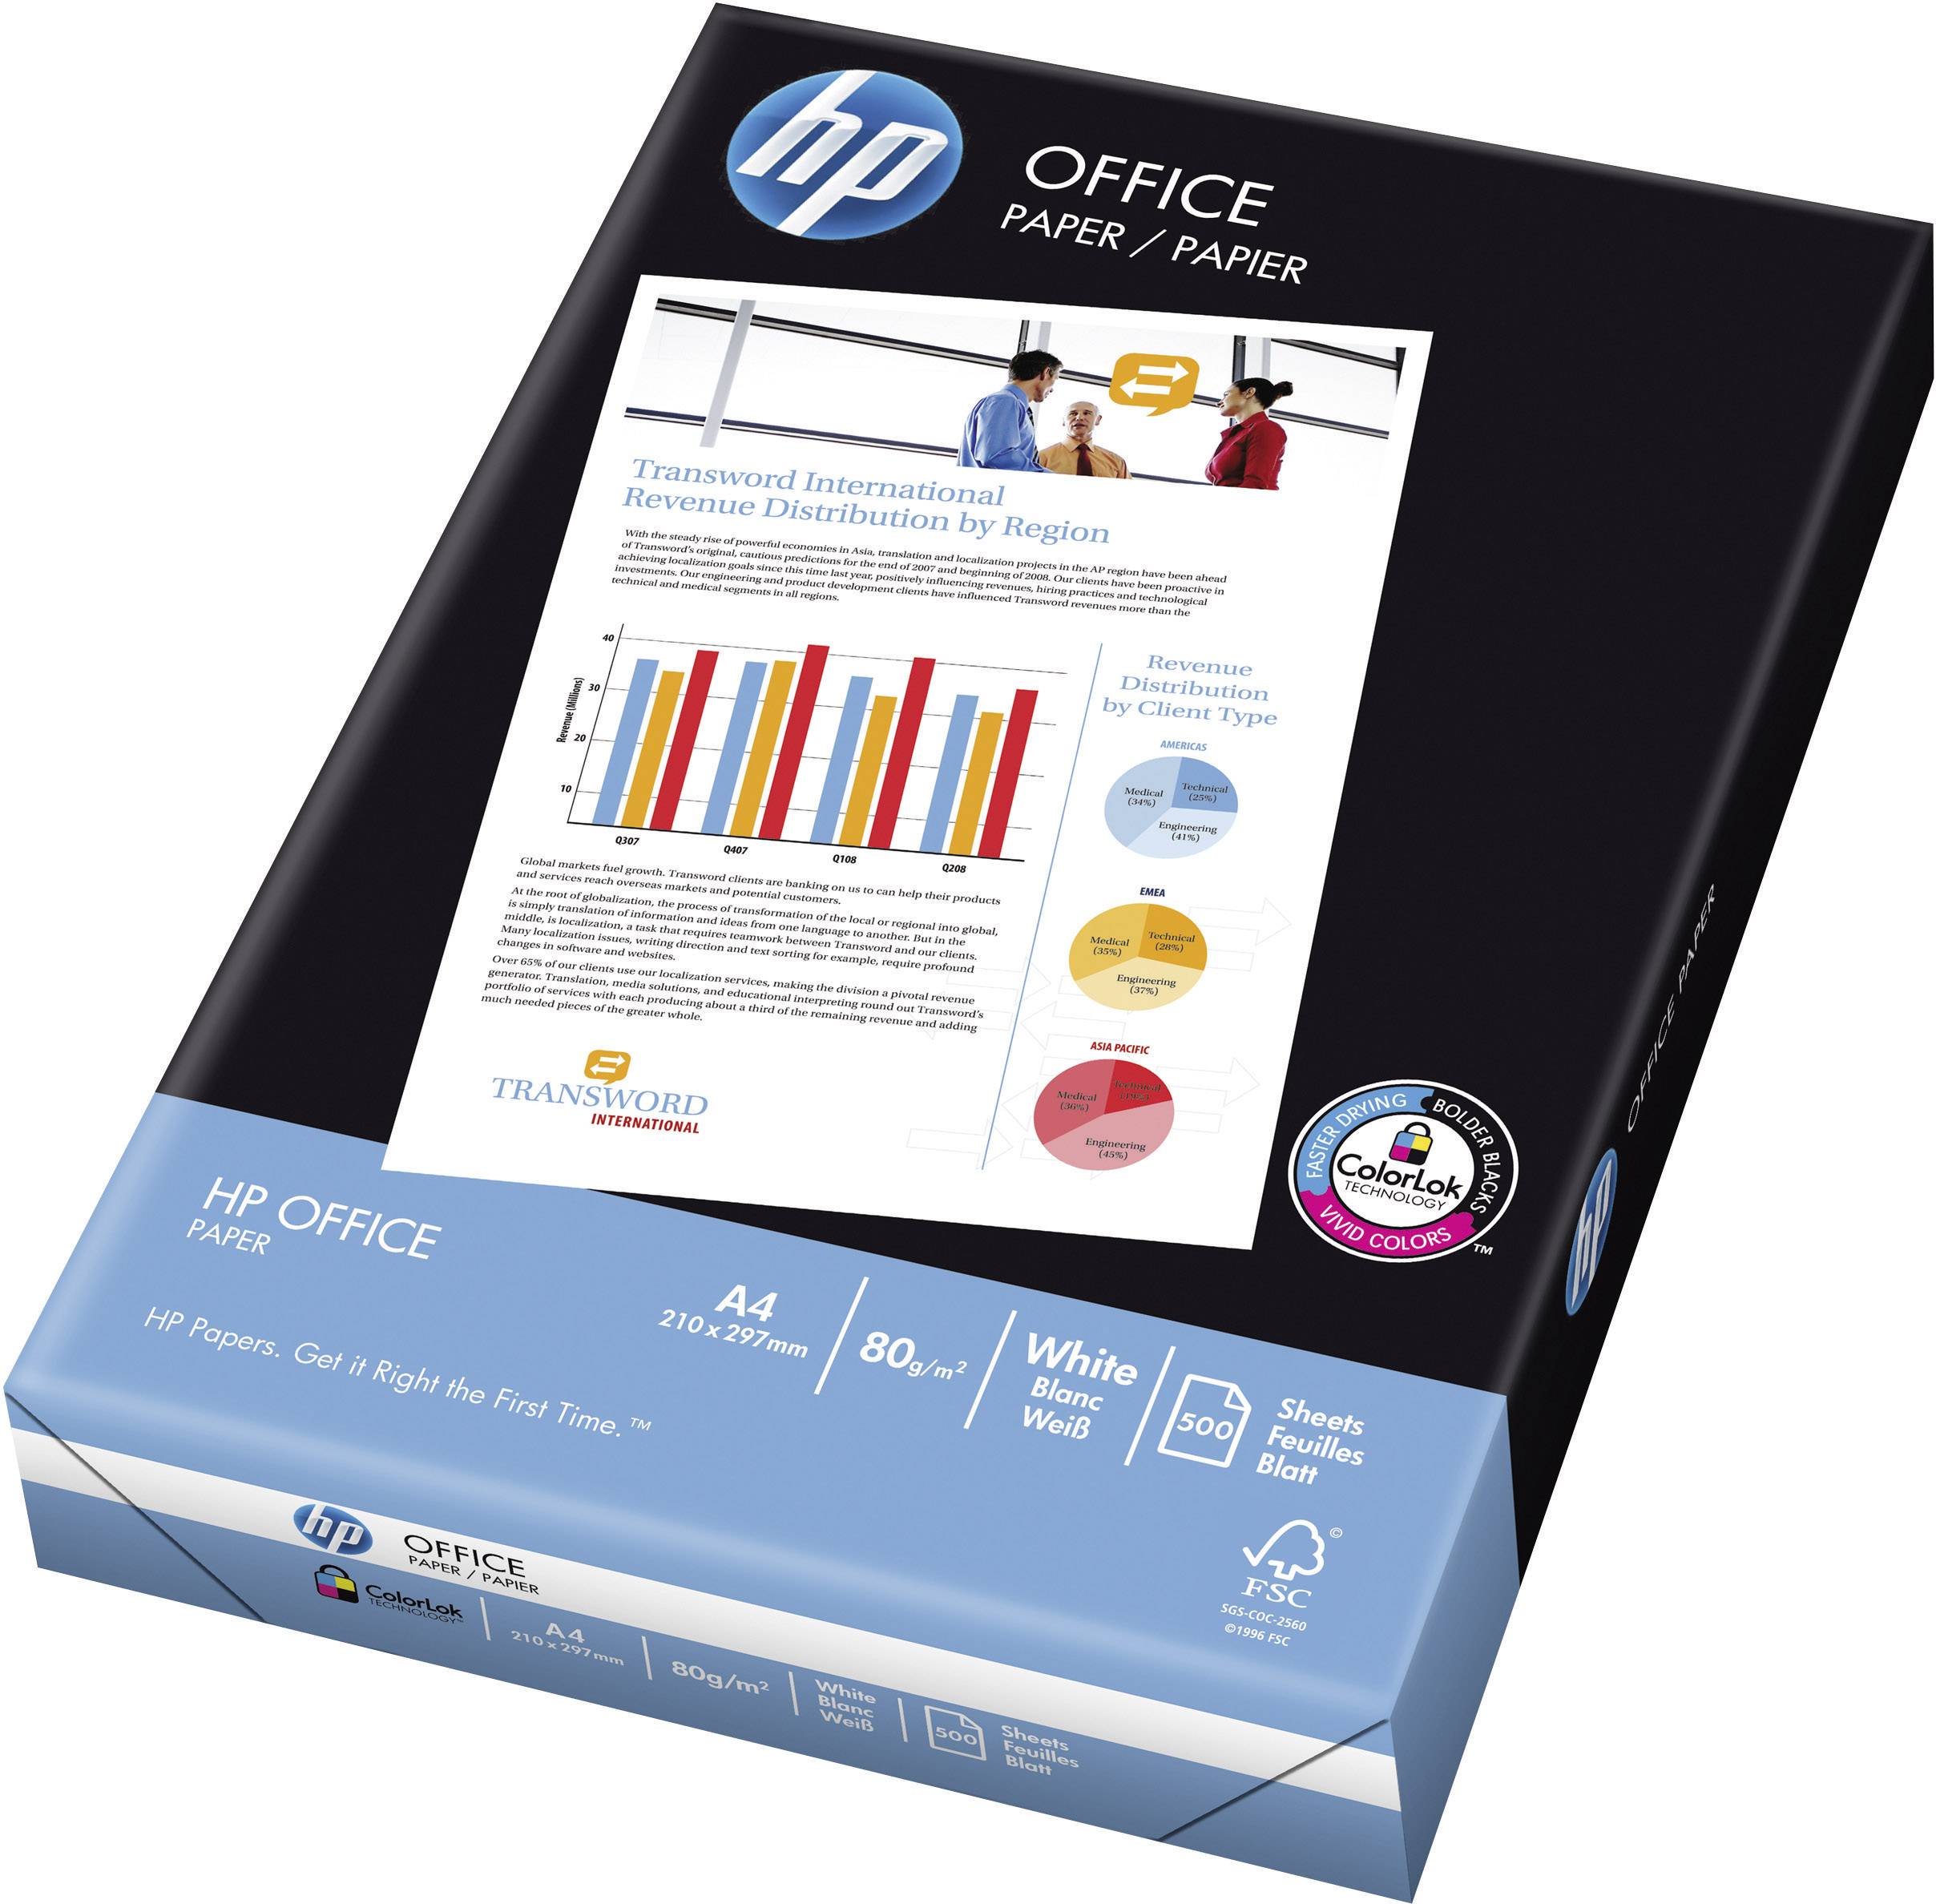 HP Office Paper CHP110 Universal printer paper A4 80 g/m² 500 sheet White |  